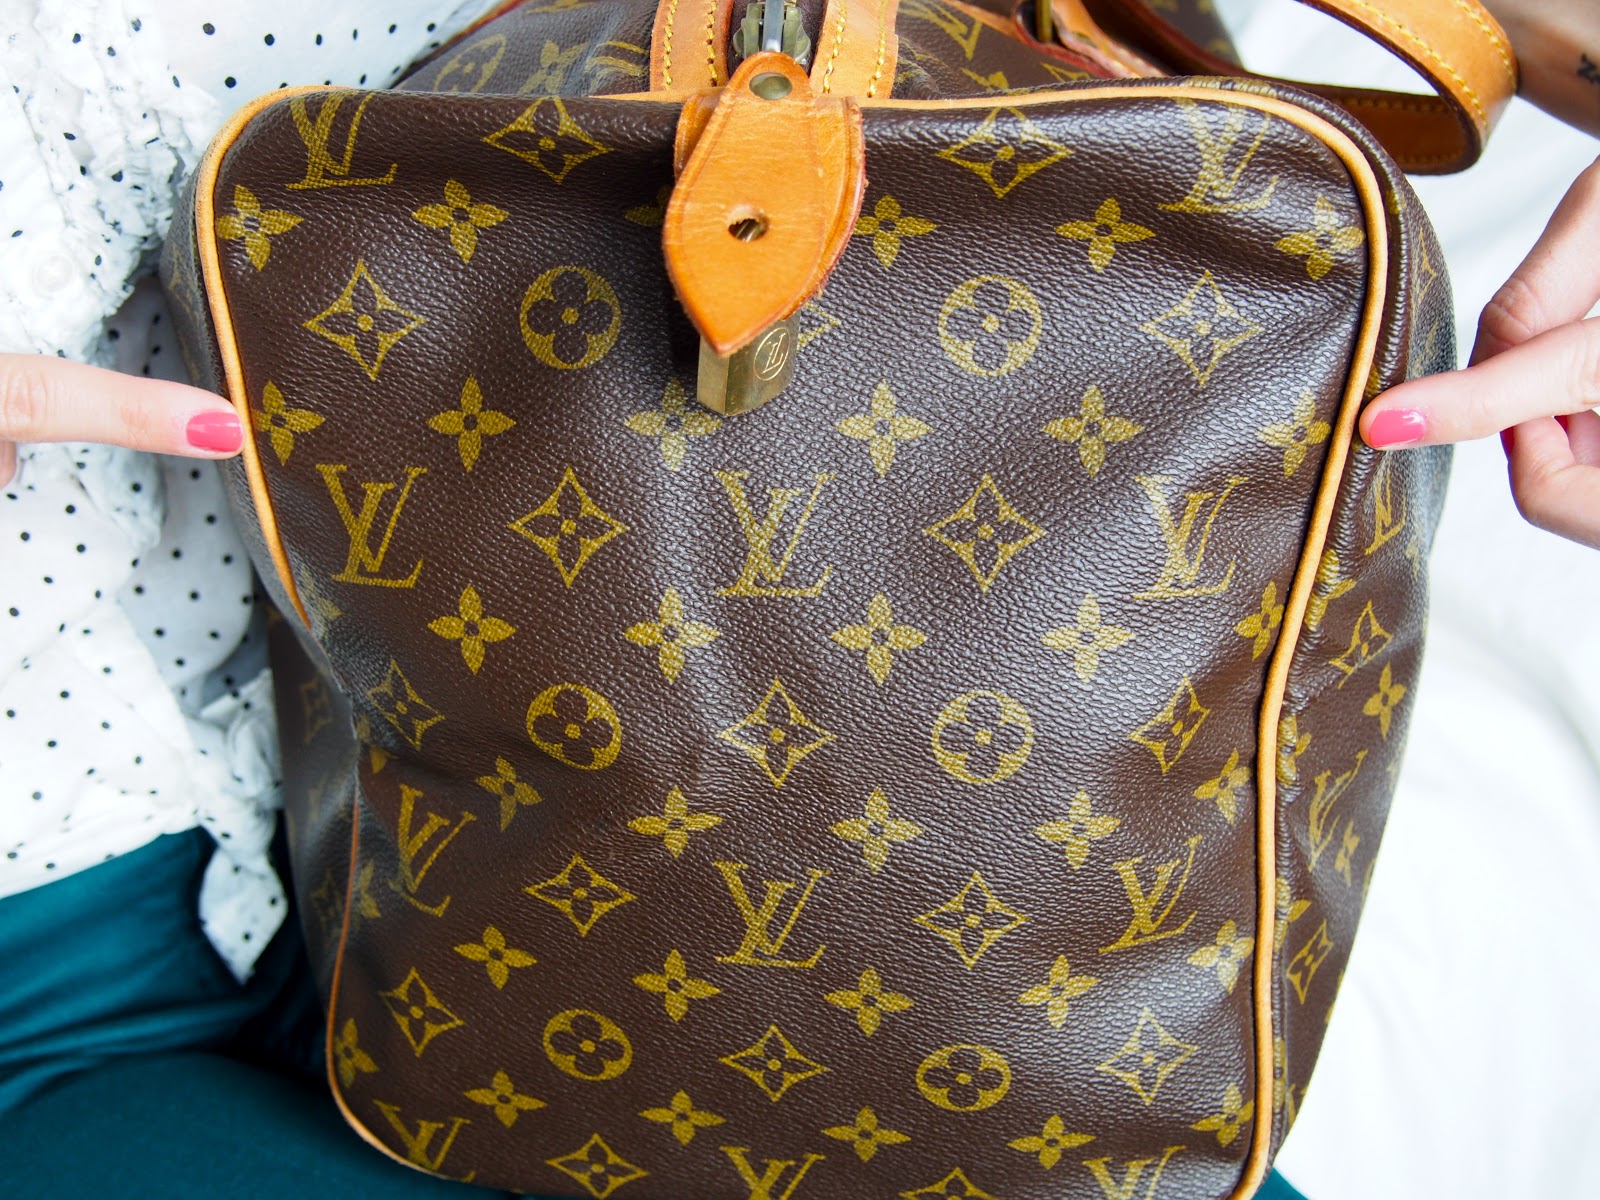 How to spot a fake Louis Vuitton Bag?